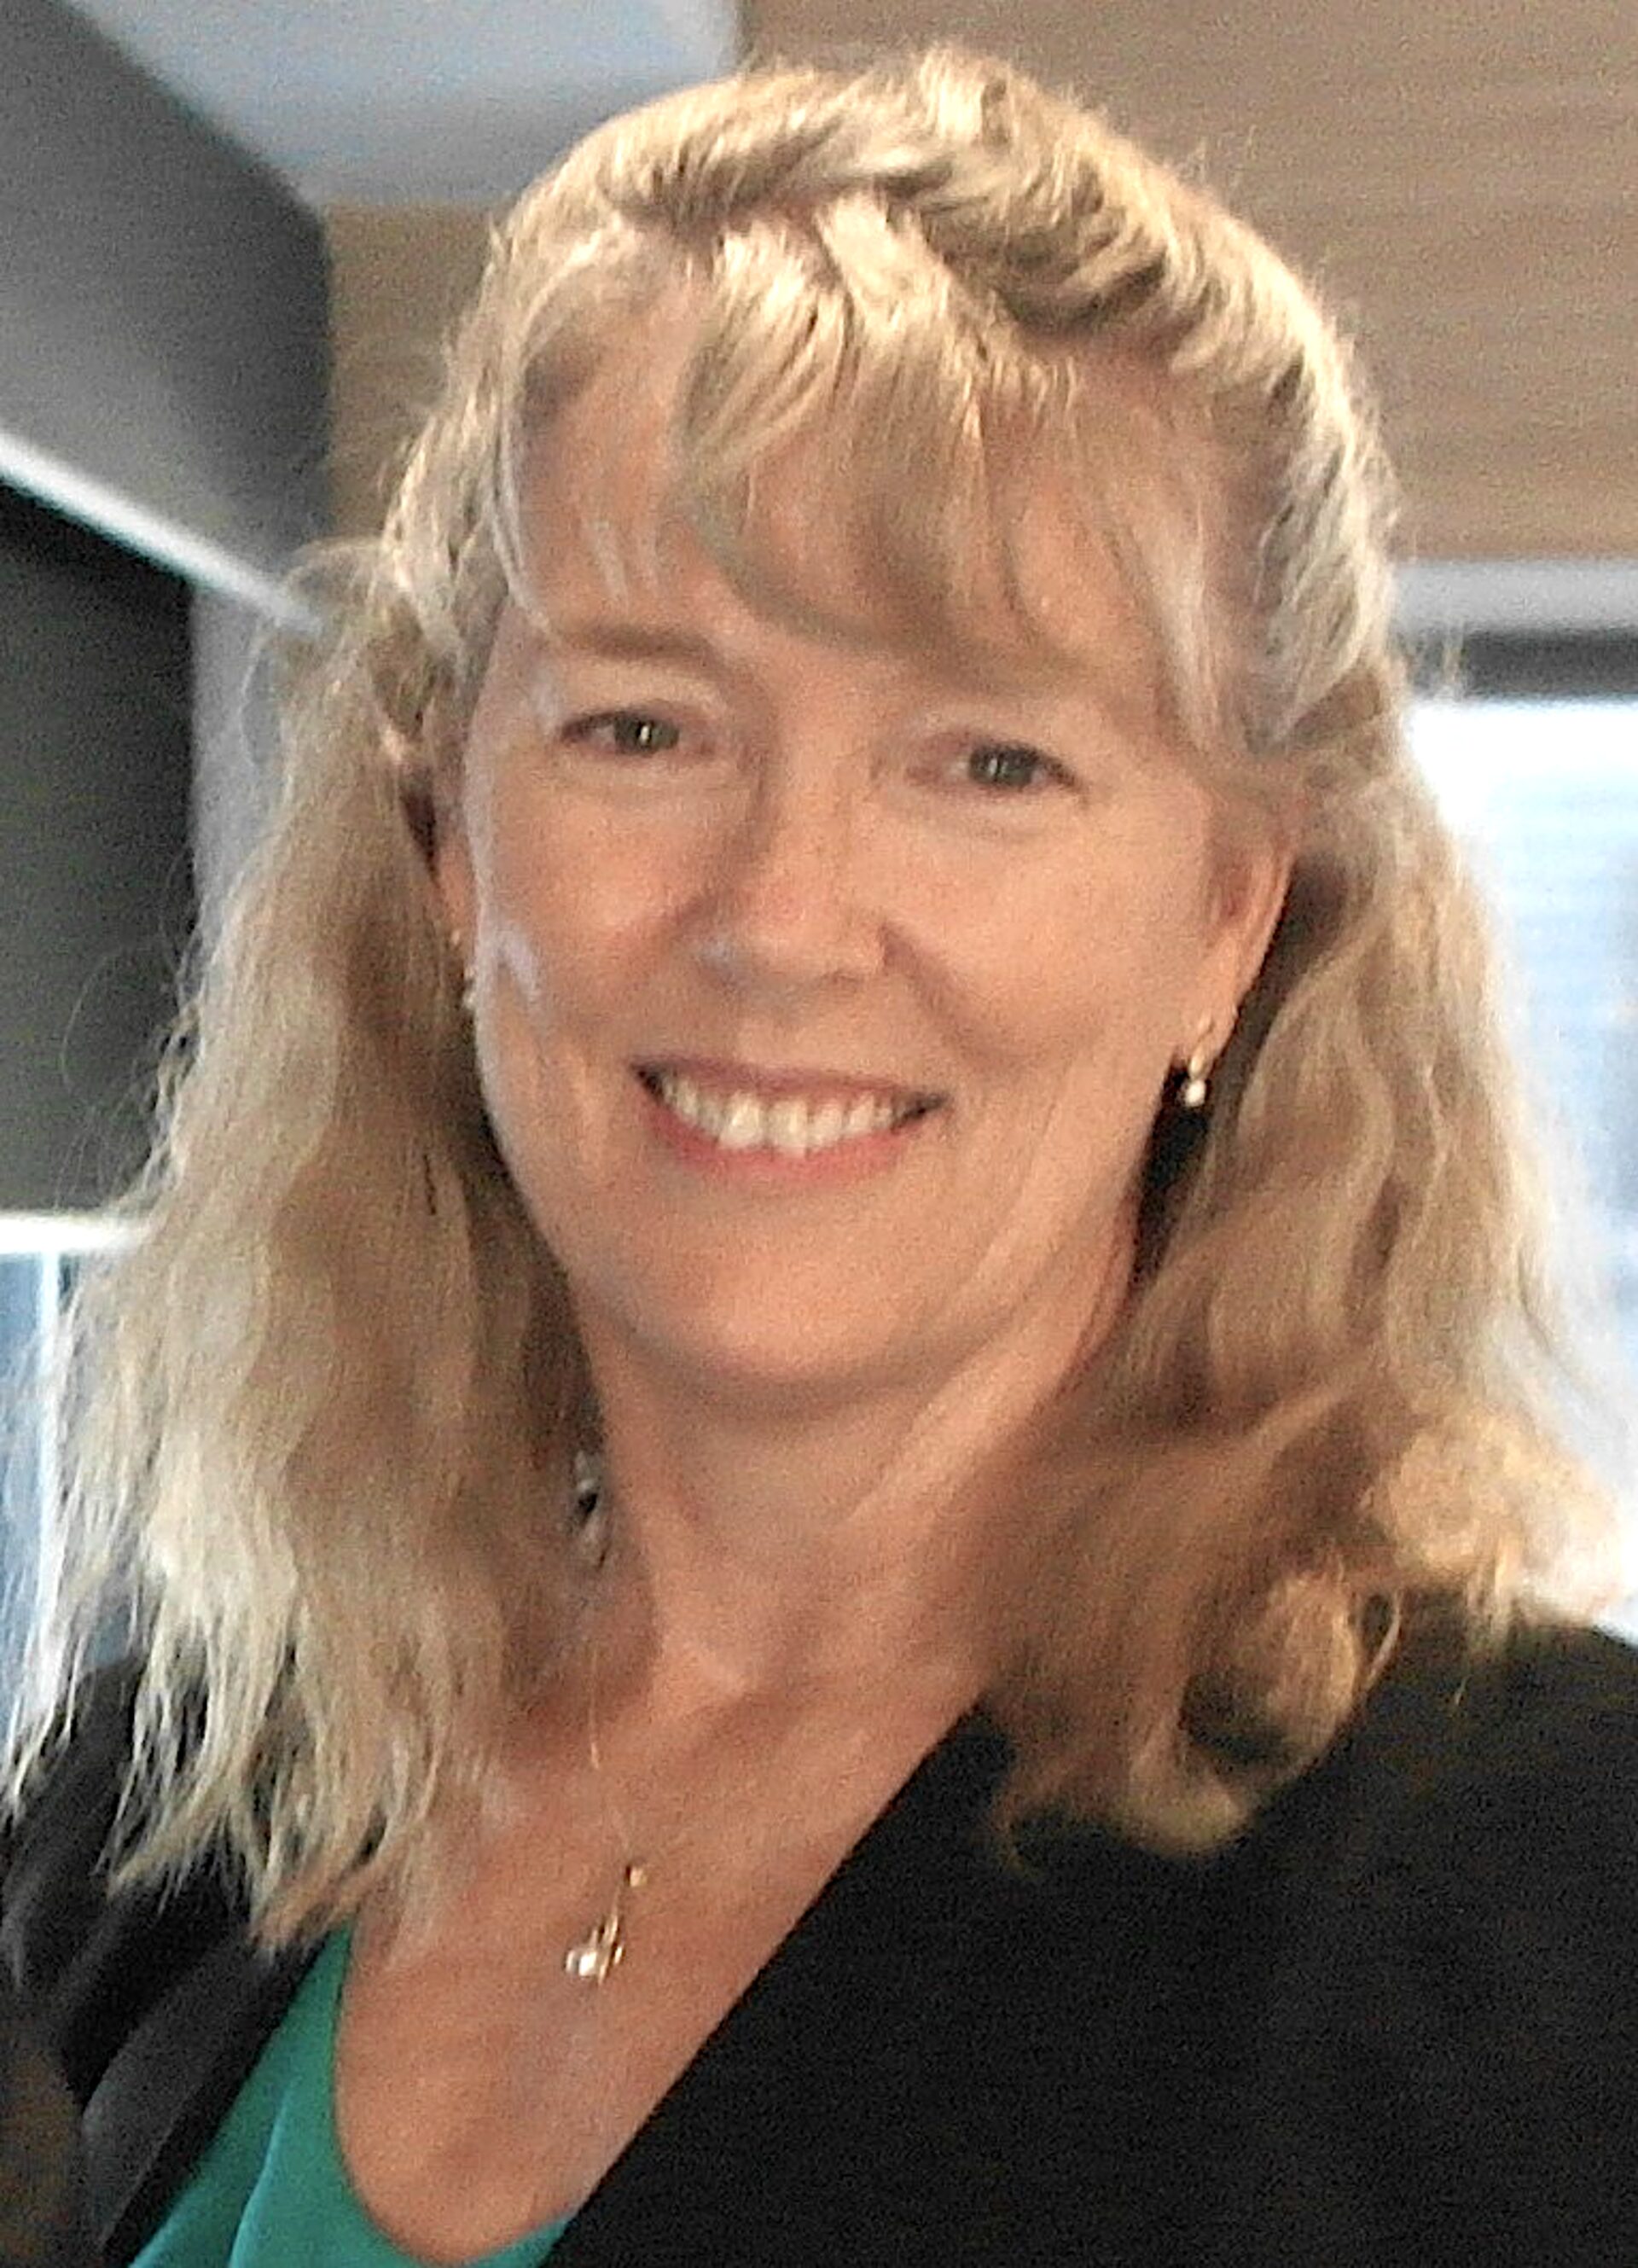 Karen Patterson